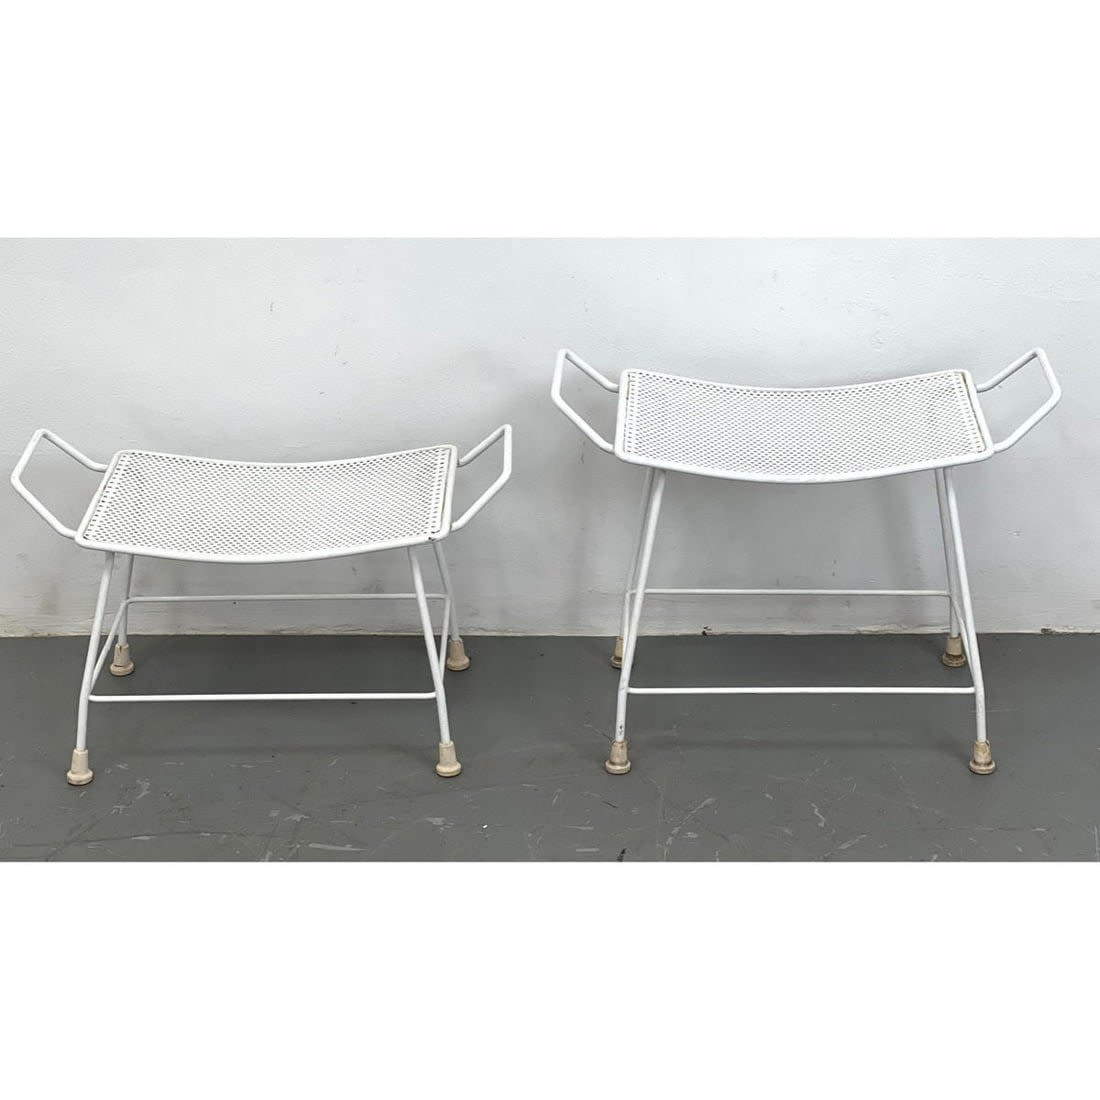 2pc white powder coated metal stools.